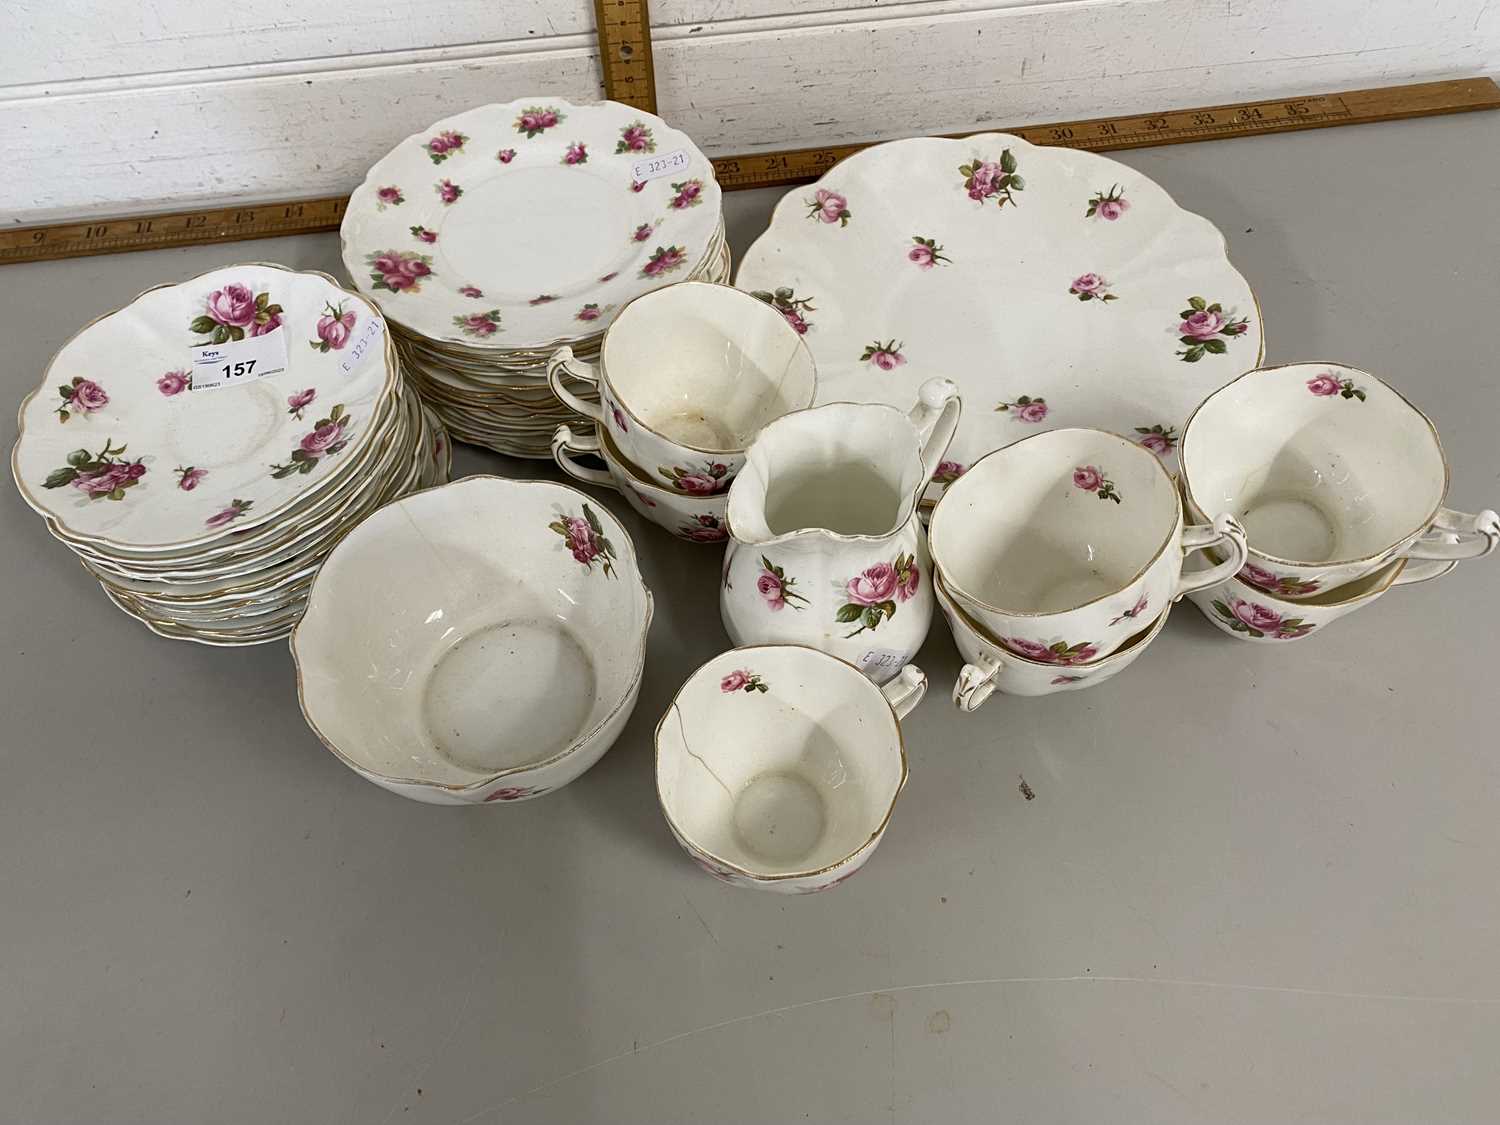 Warings, Oxford Street, London, rose decorated tea wares